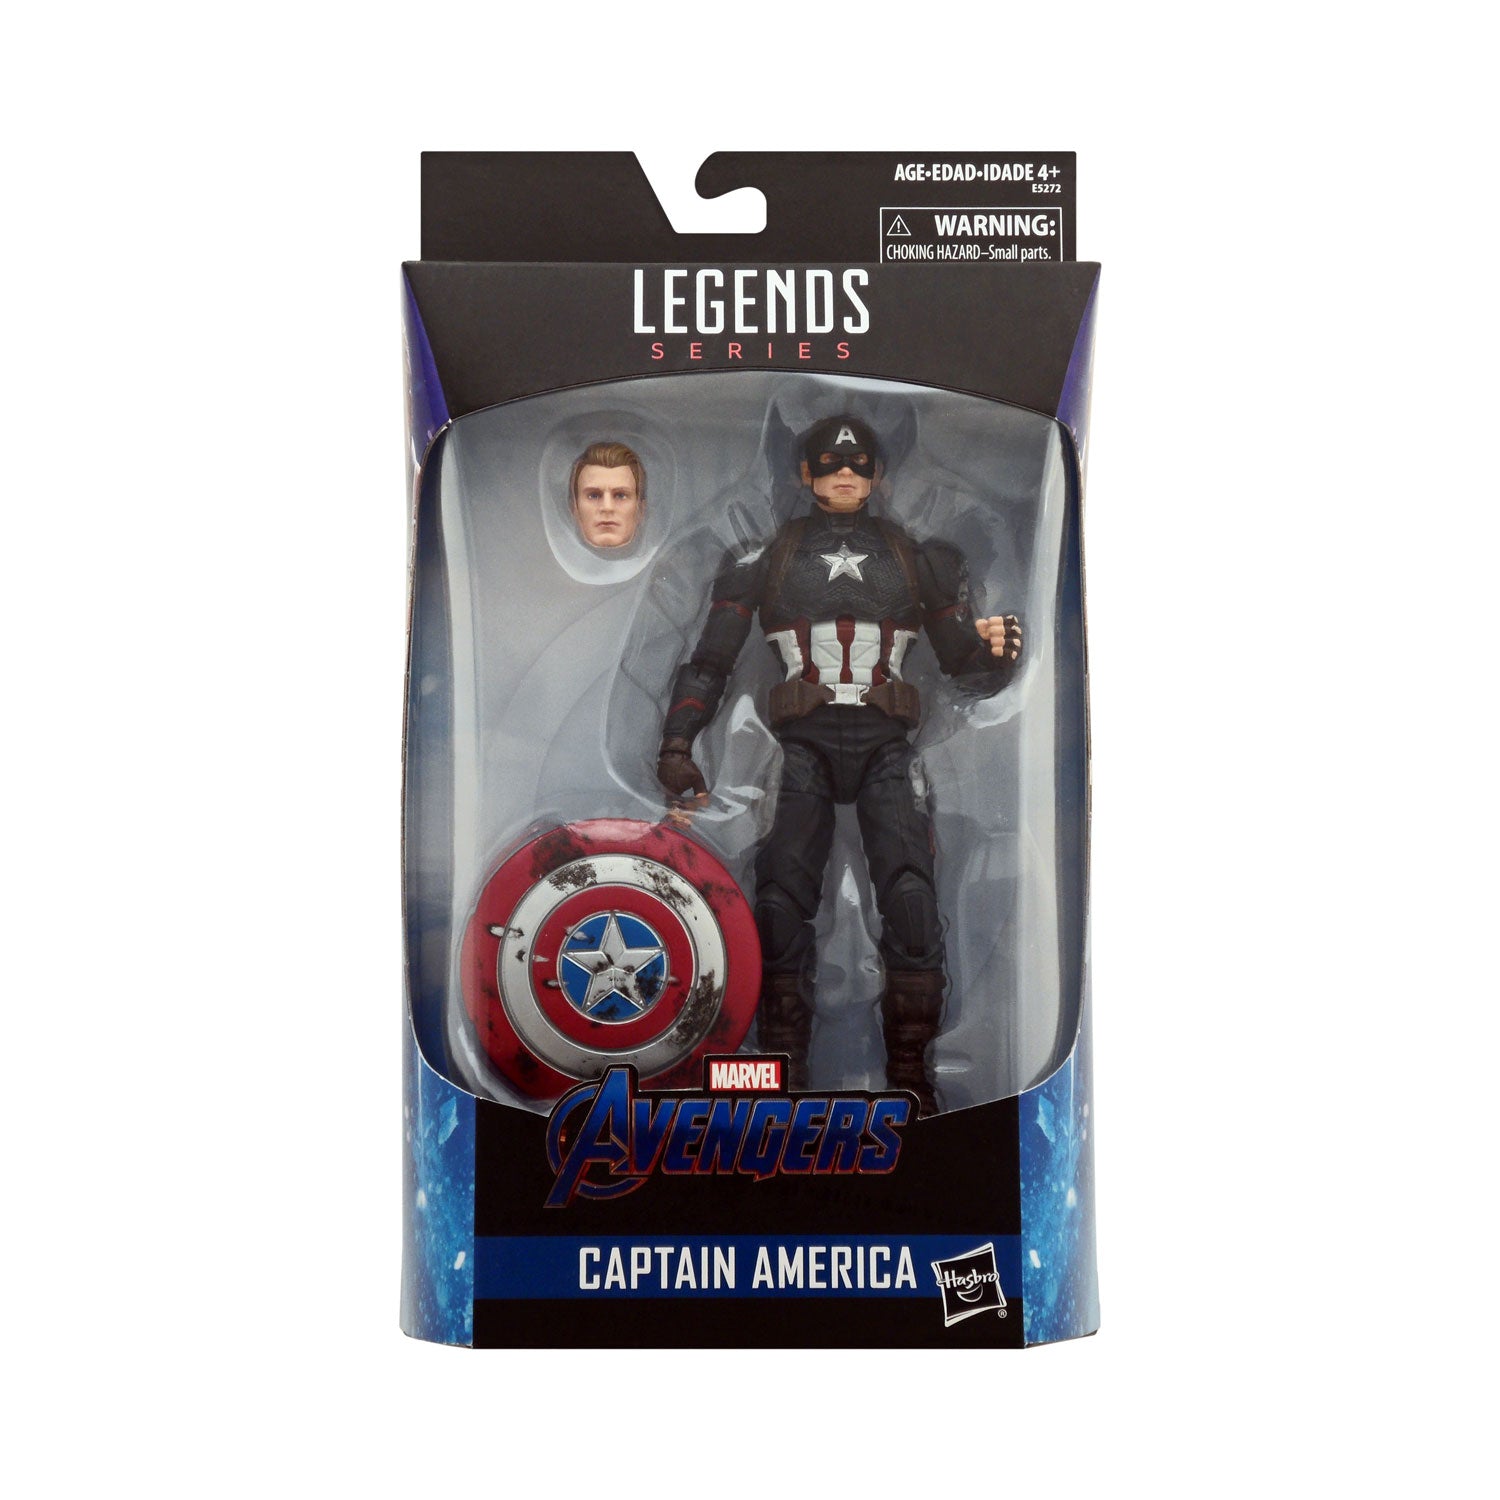 Inclinado fiesta Están deprimidos Marvel Legends Avengers: Endgame "Worthy" Captain America Exclusive –  Action Figures and Collectible Toys